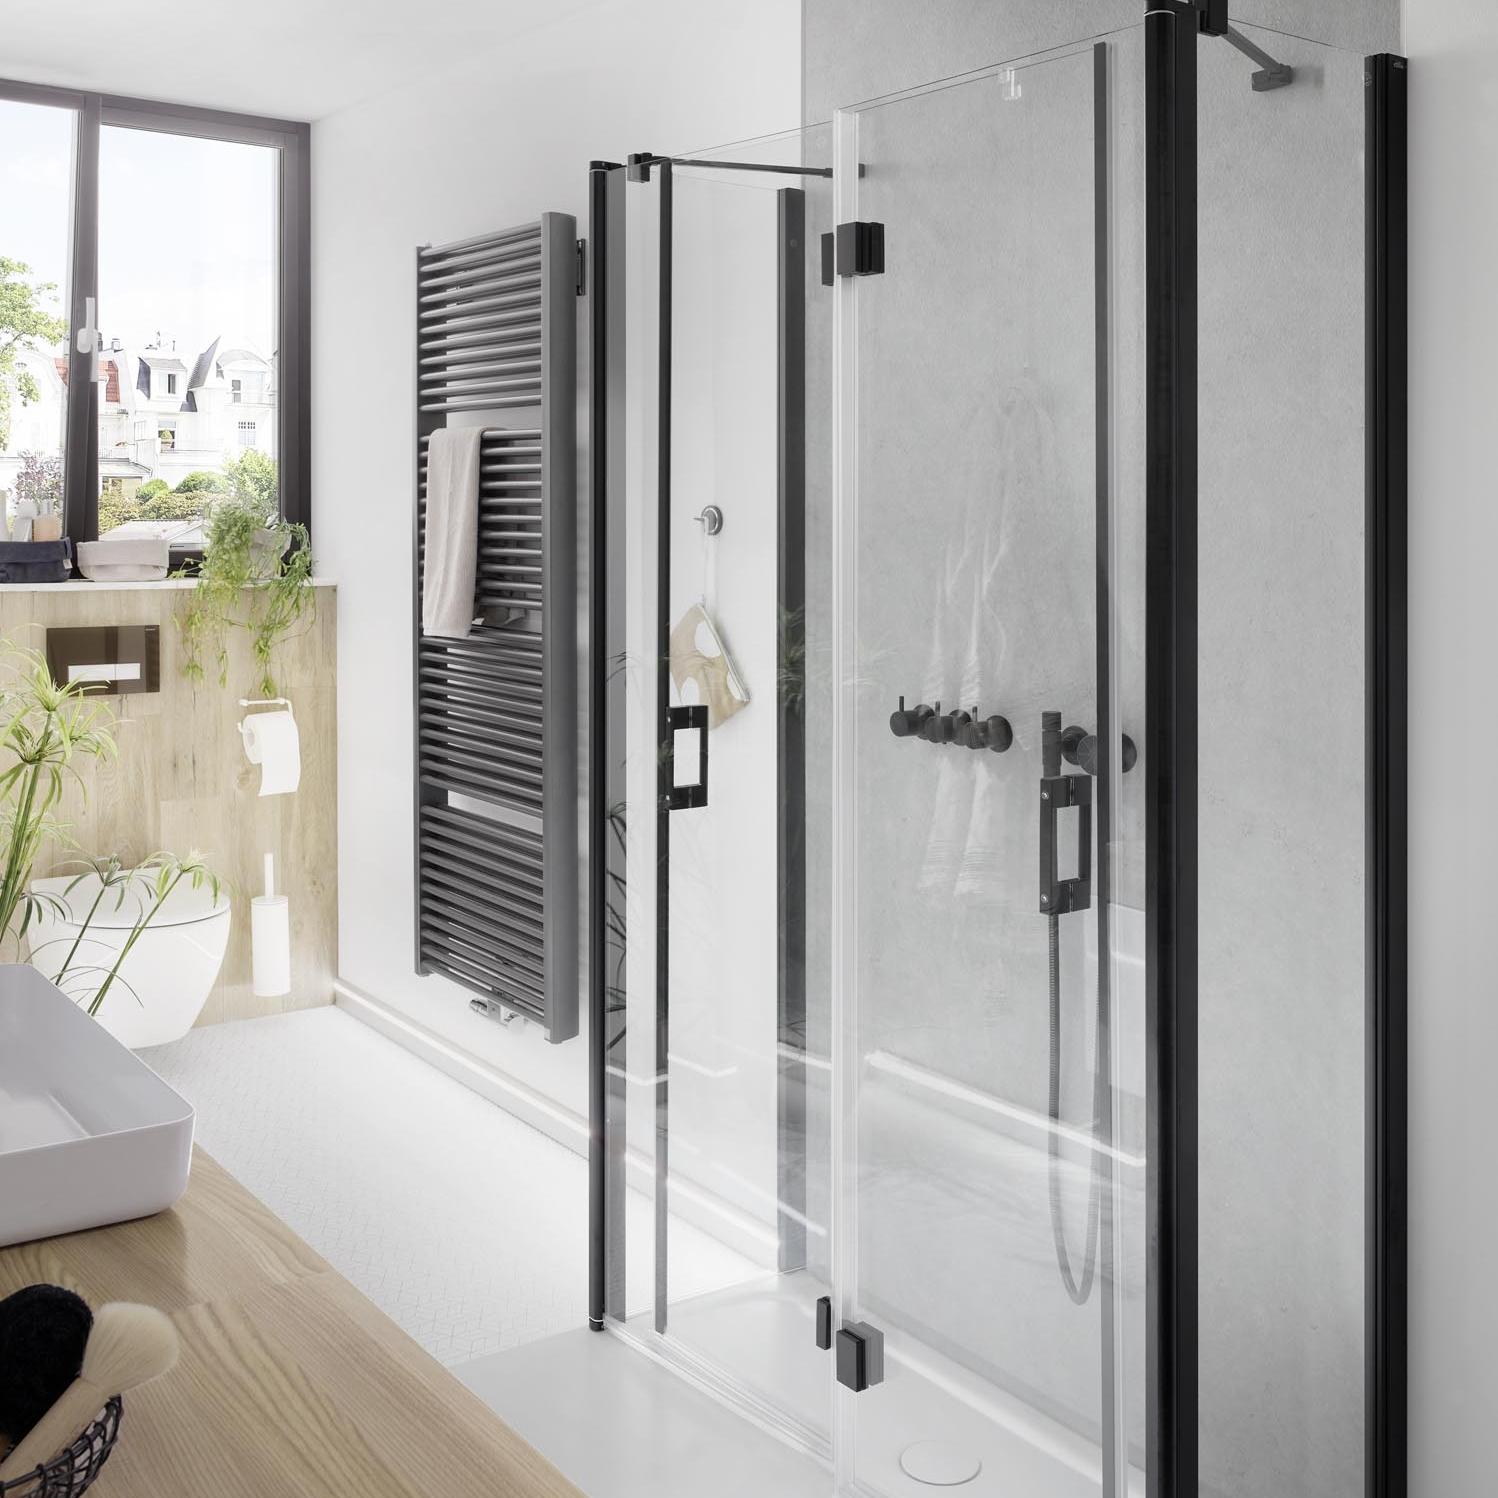 Kermi profile shower enclosure LIGA hinged folding doors U-shaped shower enclosure Black folded